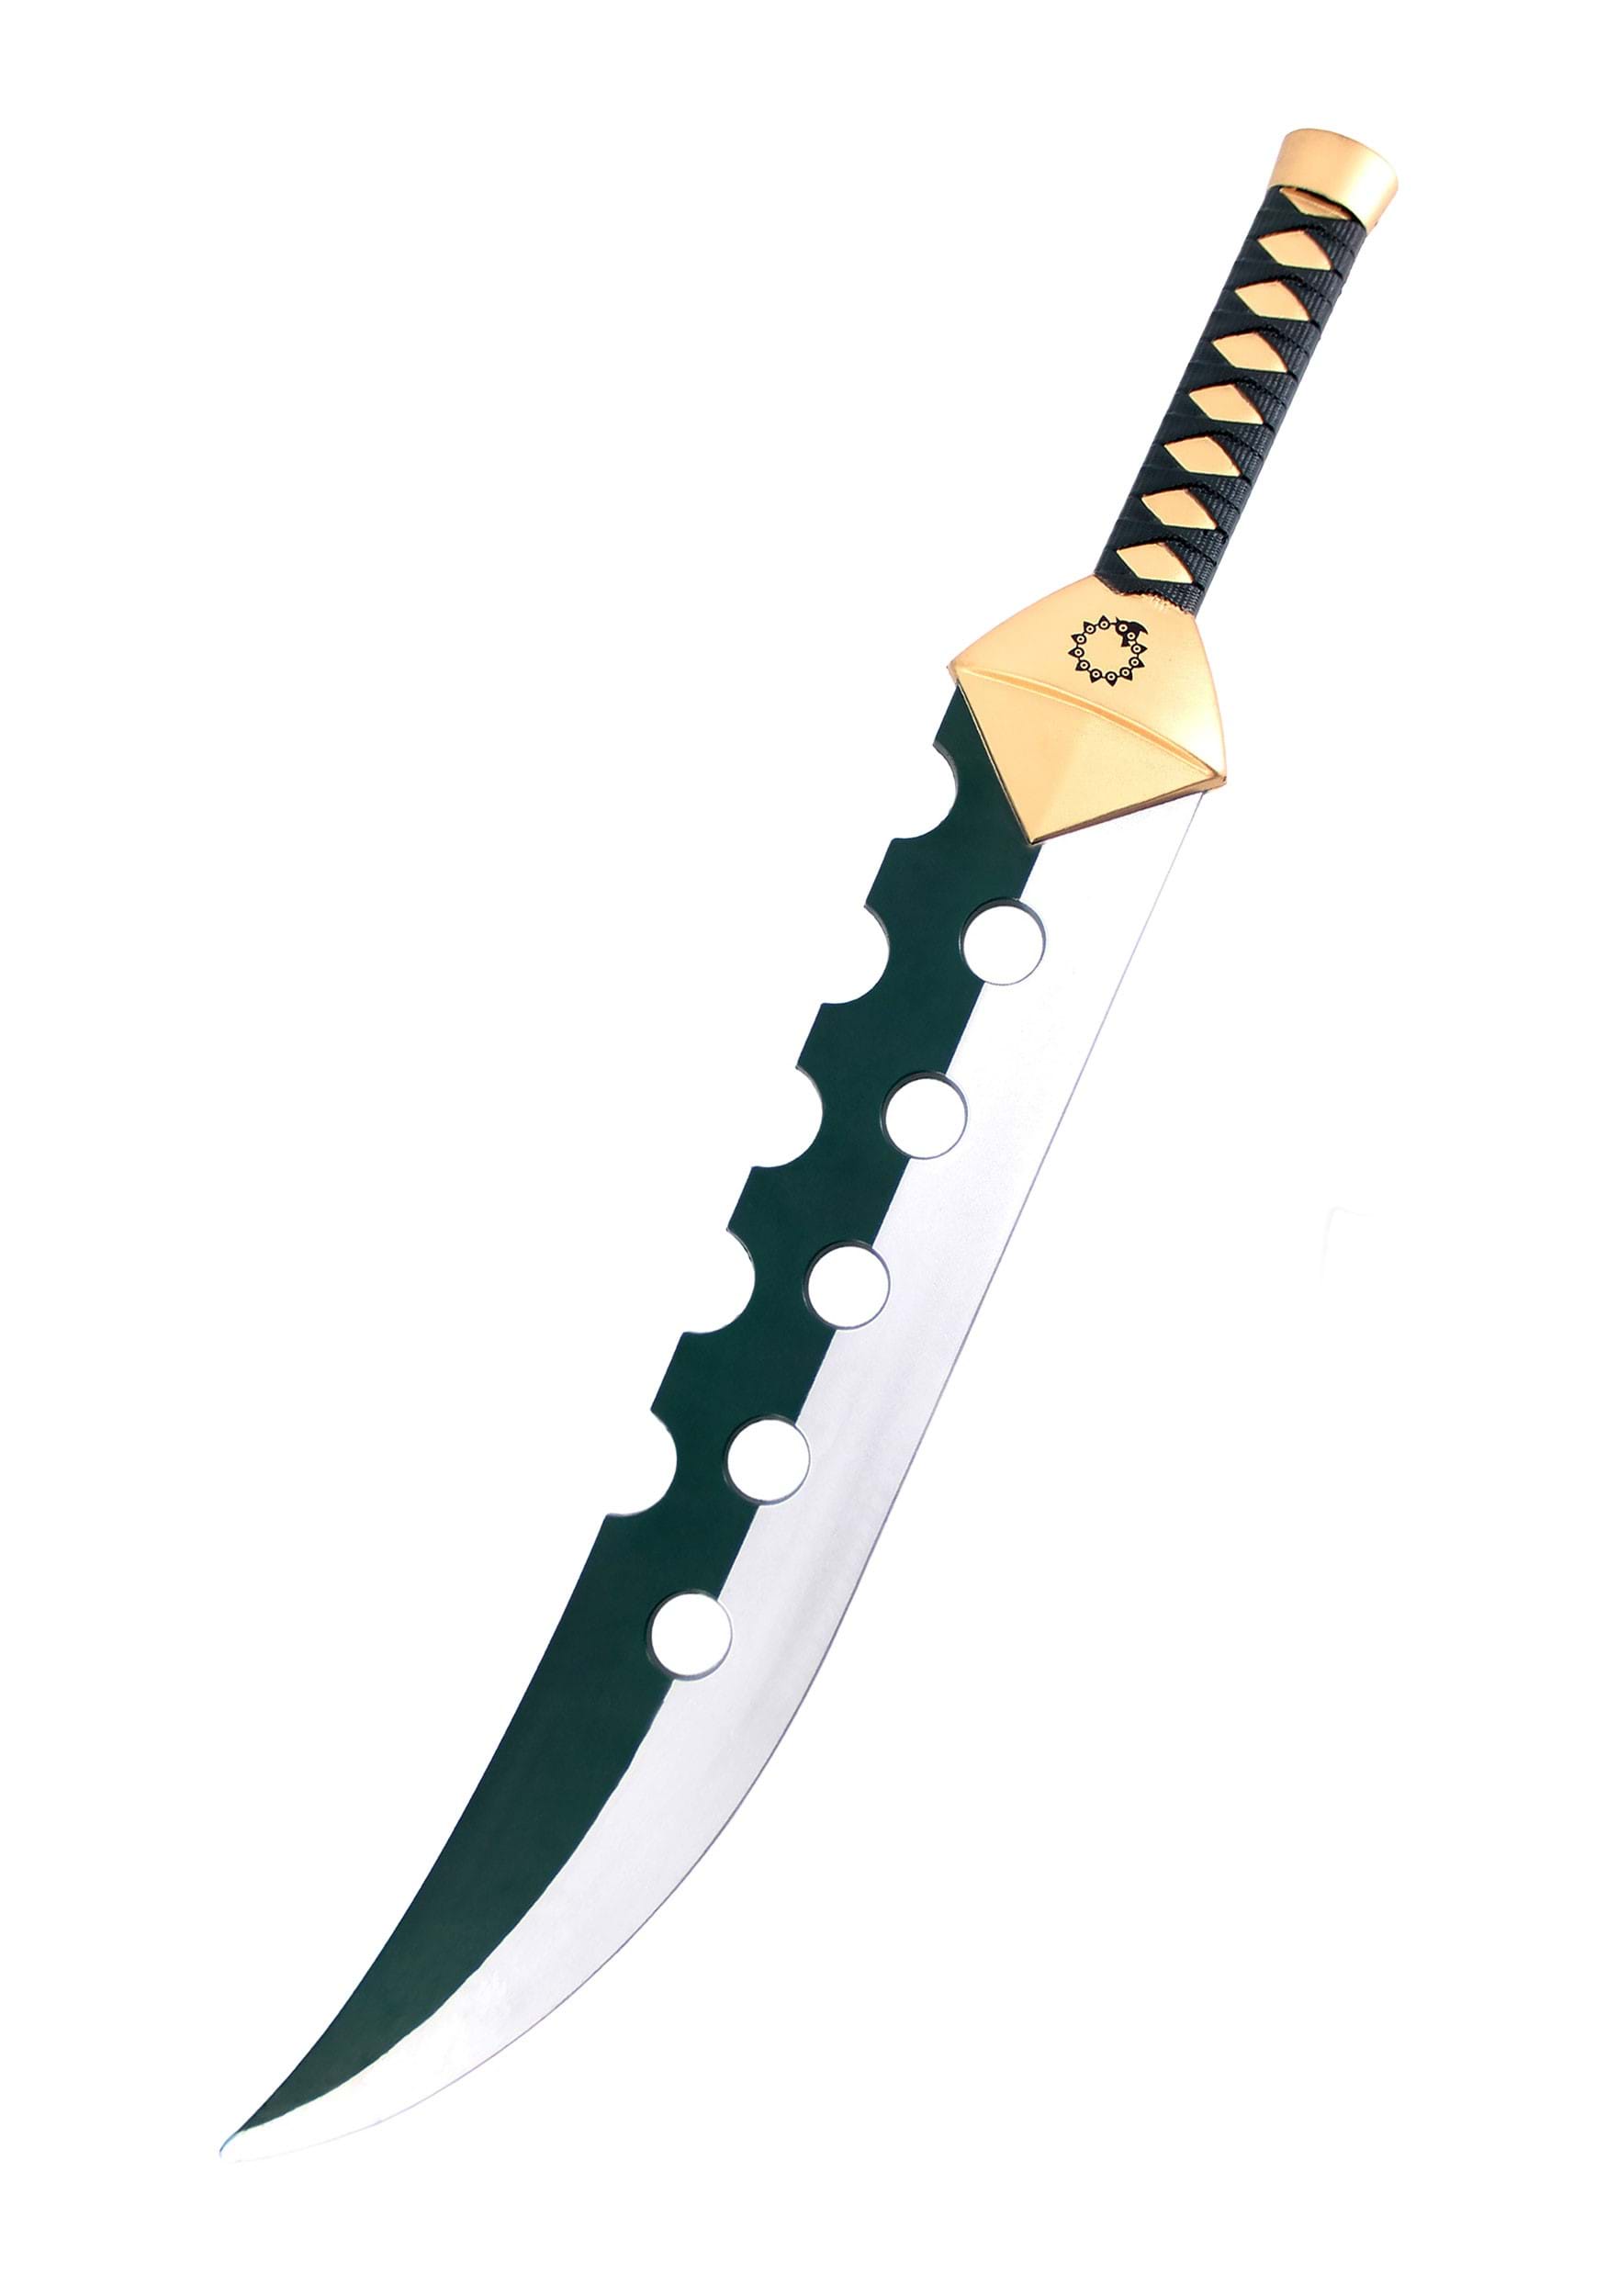 Japanese Anime Sword,Hand Forged Carbon Steel Samurai Katana Demon Slayer  Sword | eBay